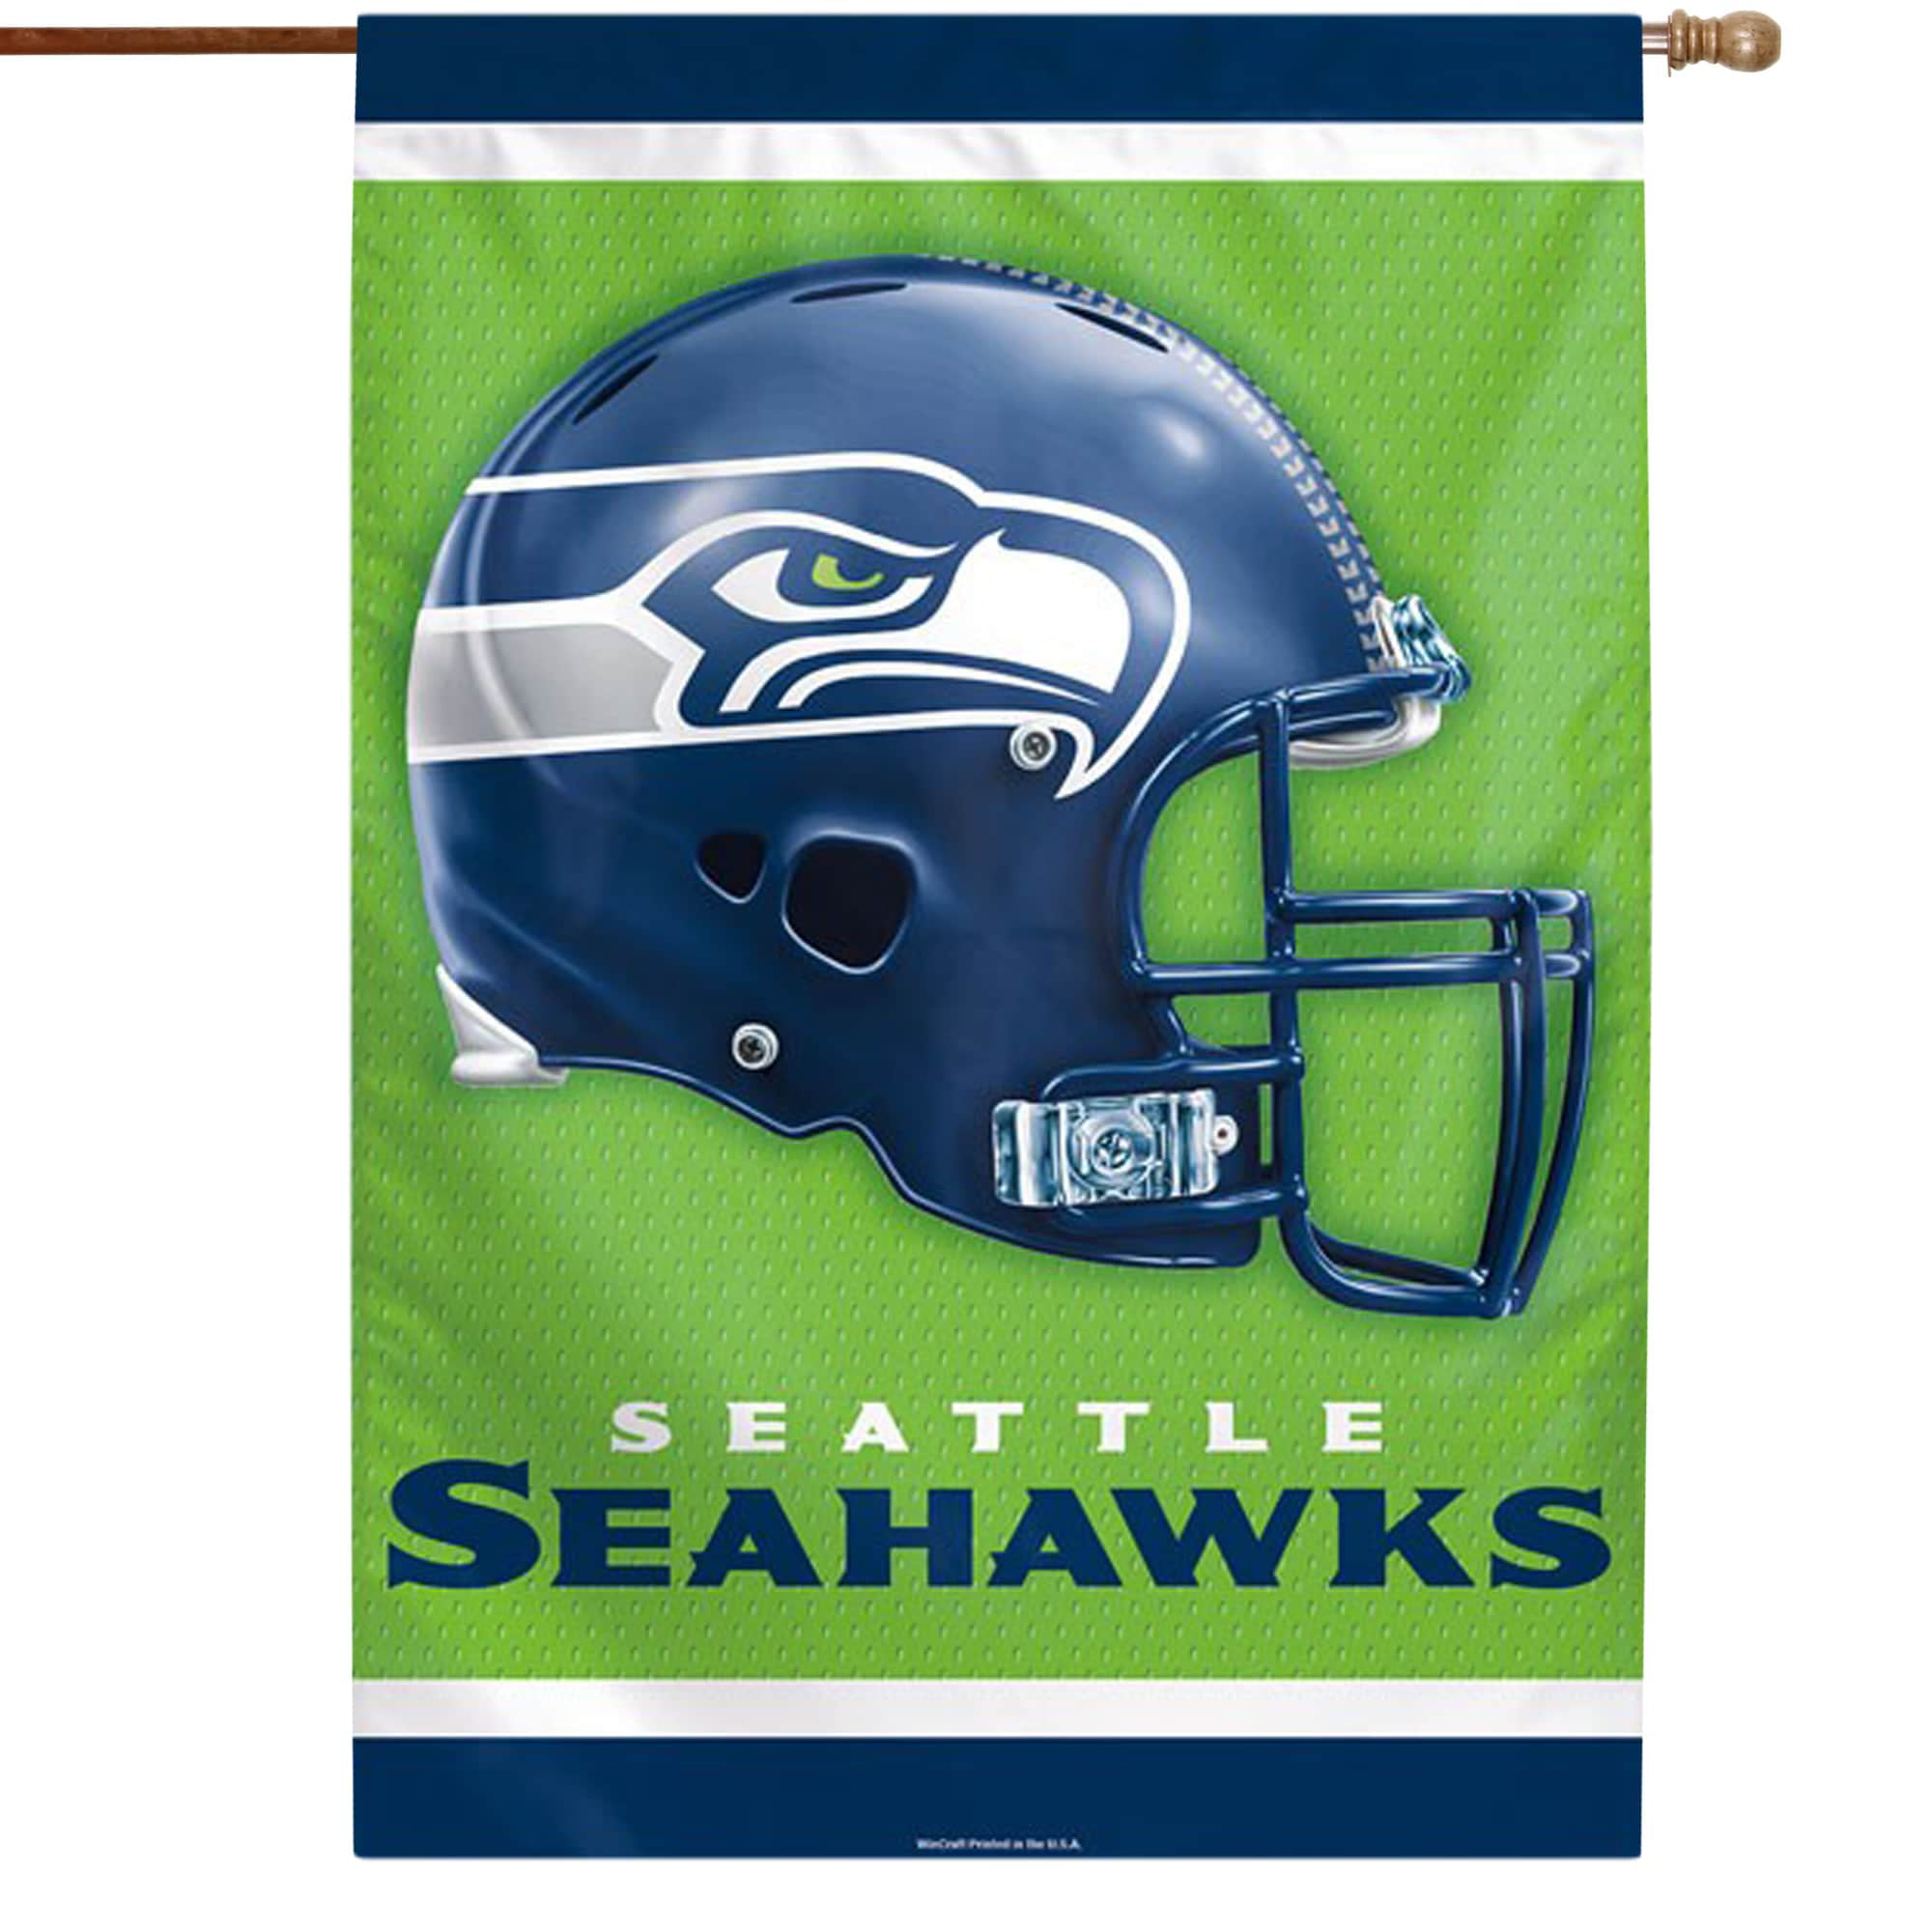 Seattle Seahawks and 12 X 12 Helmet Design Felt Material. One 17 X 30 Large Pennant Design Wall Decor